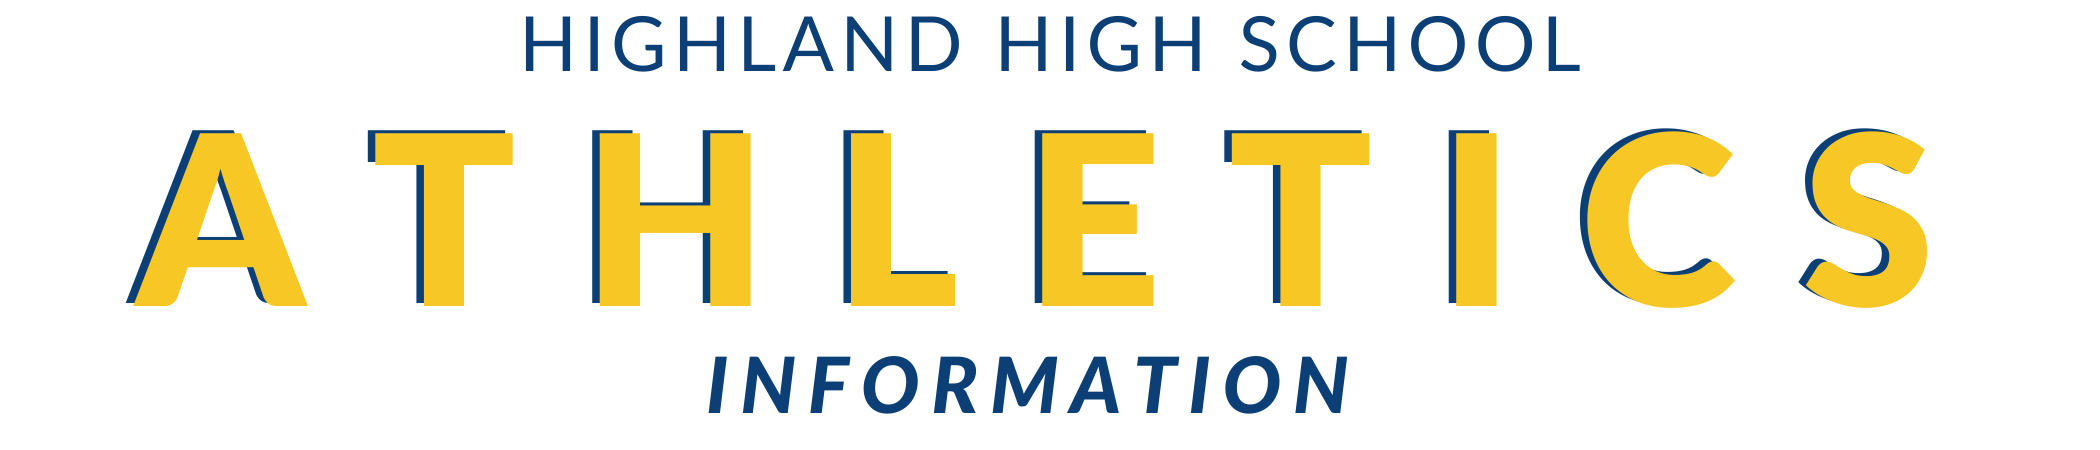 Highland High School Athletics Information